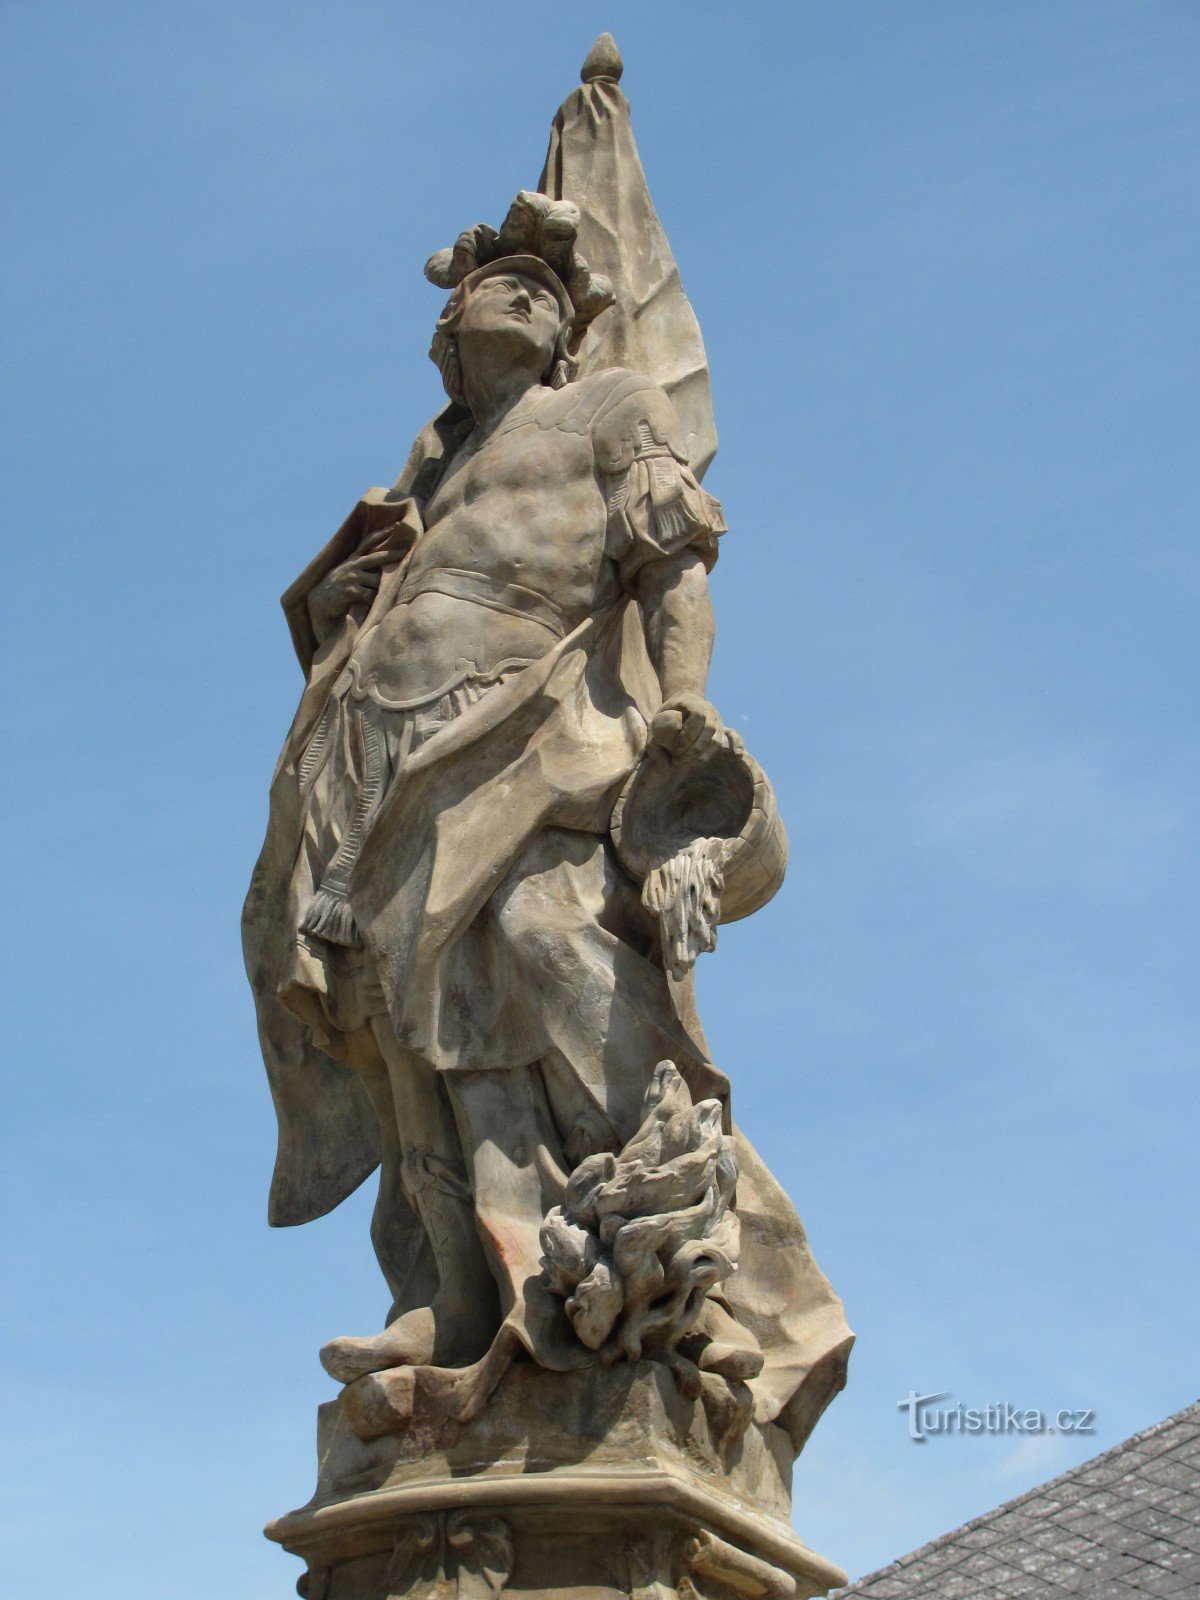 Náklo - standbeeld van St. Floriana